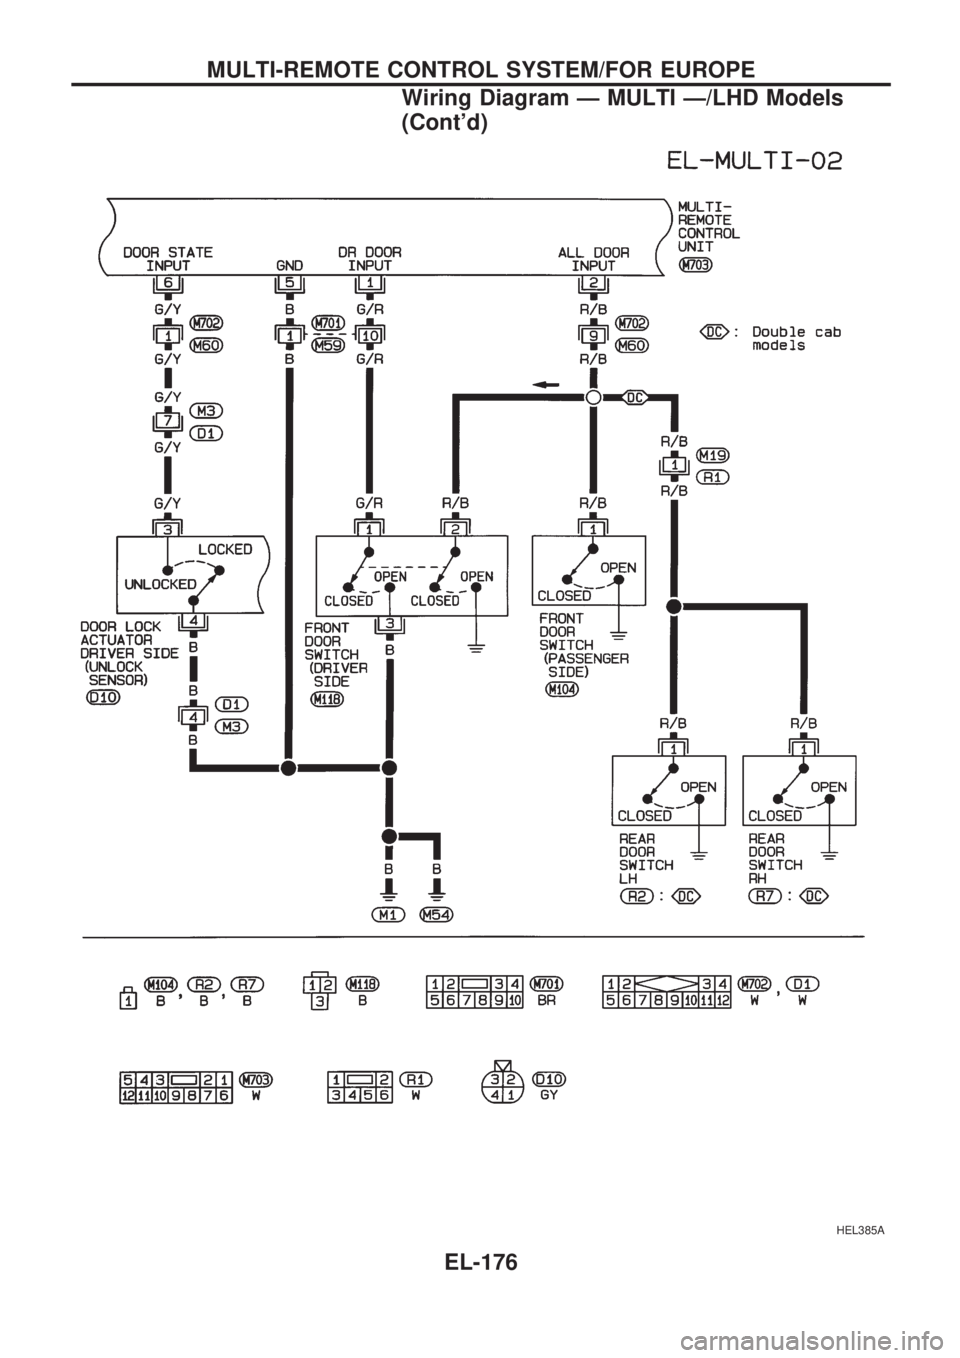 NISSAN PICK-UP 1998  Repair Manual HEL385A
MULTI-REMOTE CONTROL SYSTEM/FOR EUROPE
Wiring Diagram Ð MULTI Ð/LHD Models
(Contd)
EL-176 